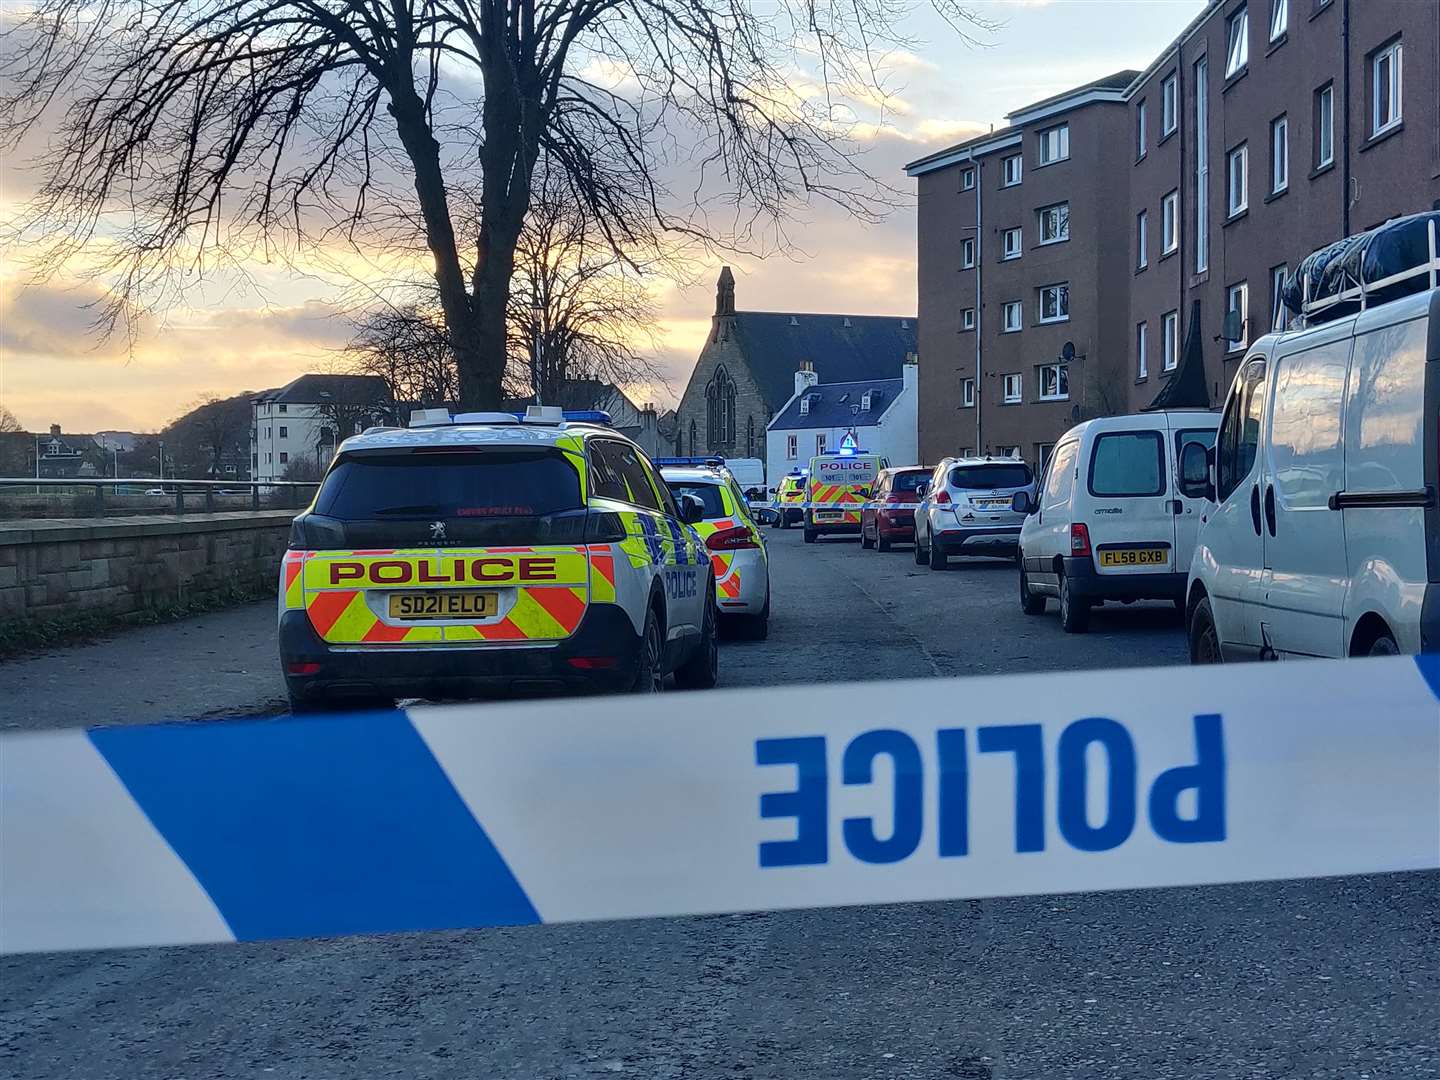 A man has been taken to hospital following reports of a disturbance in Gilbert Street, Merkinch.